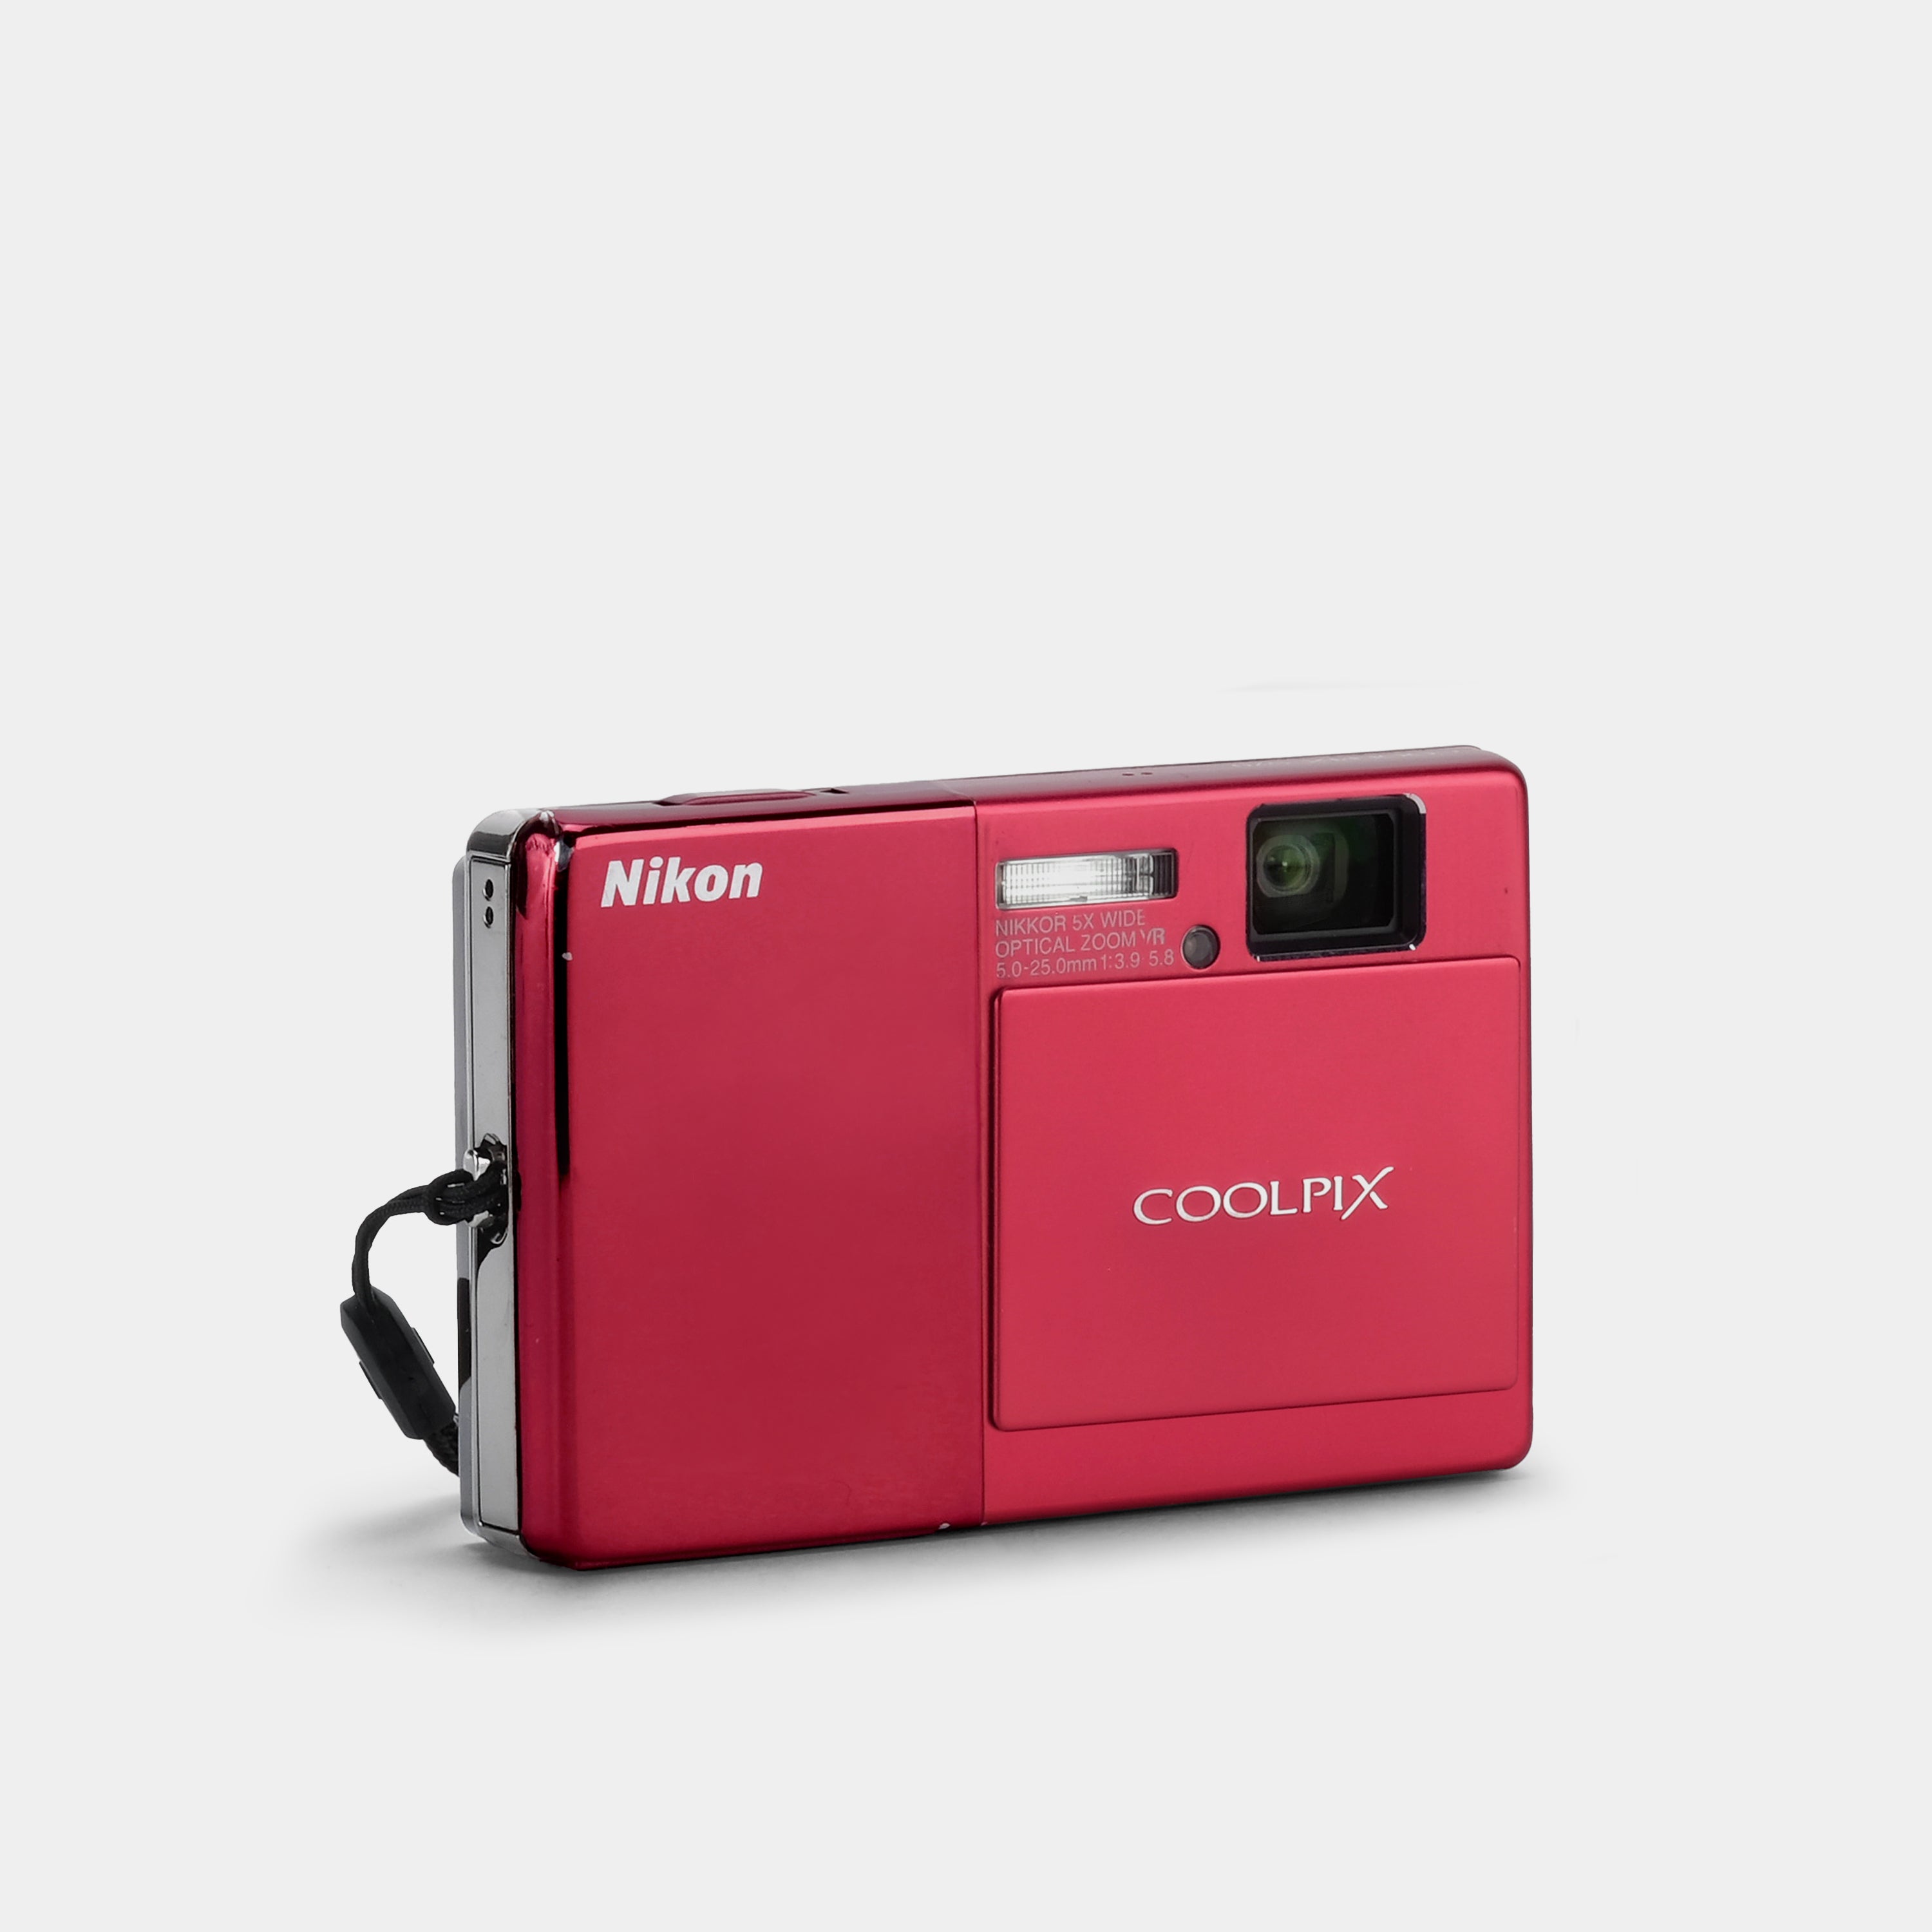 Nikon Coolpix S70 Digital Point and Shoot Camera